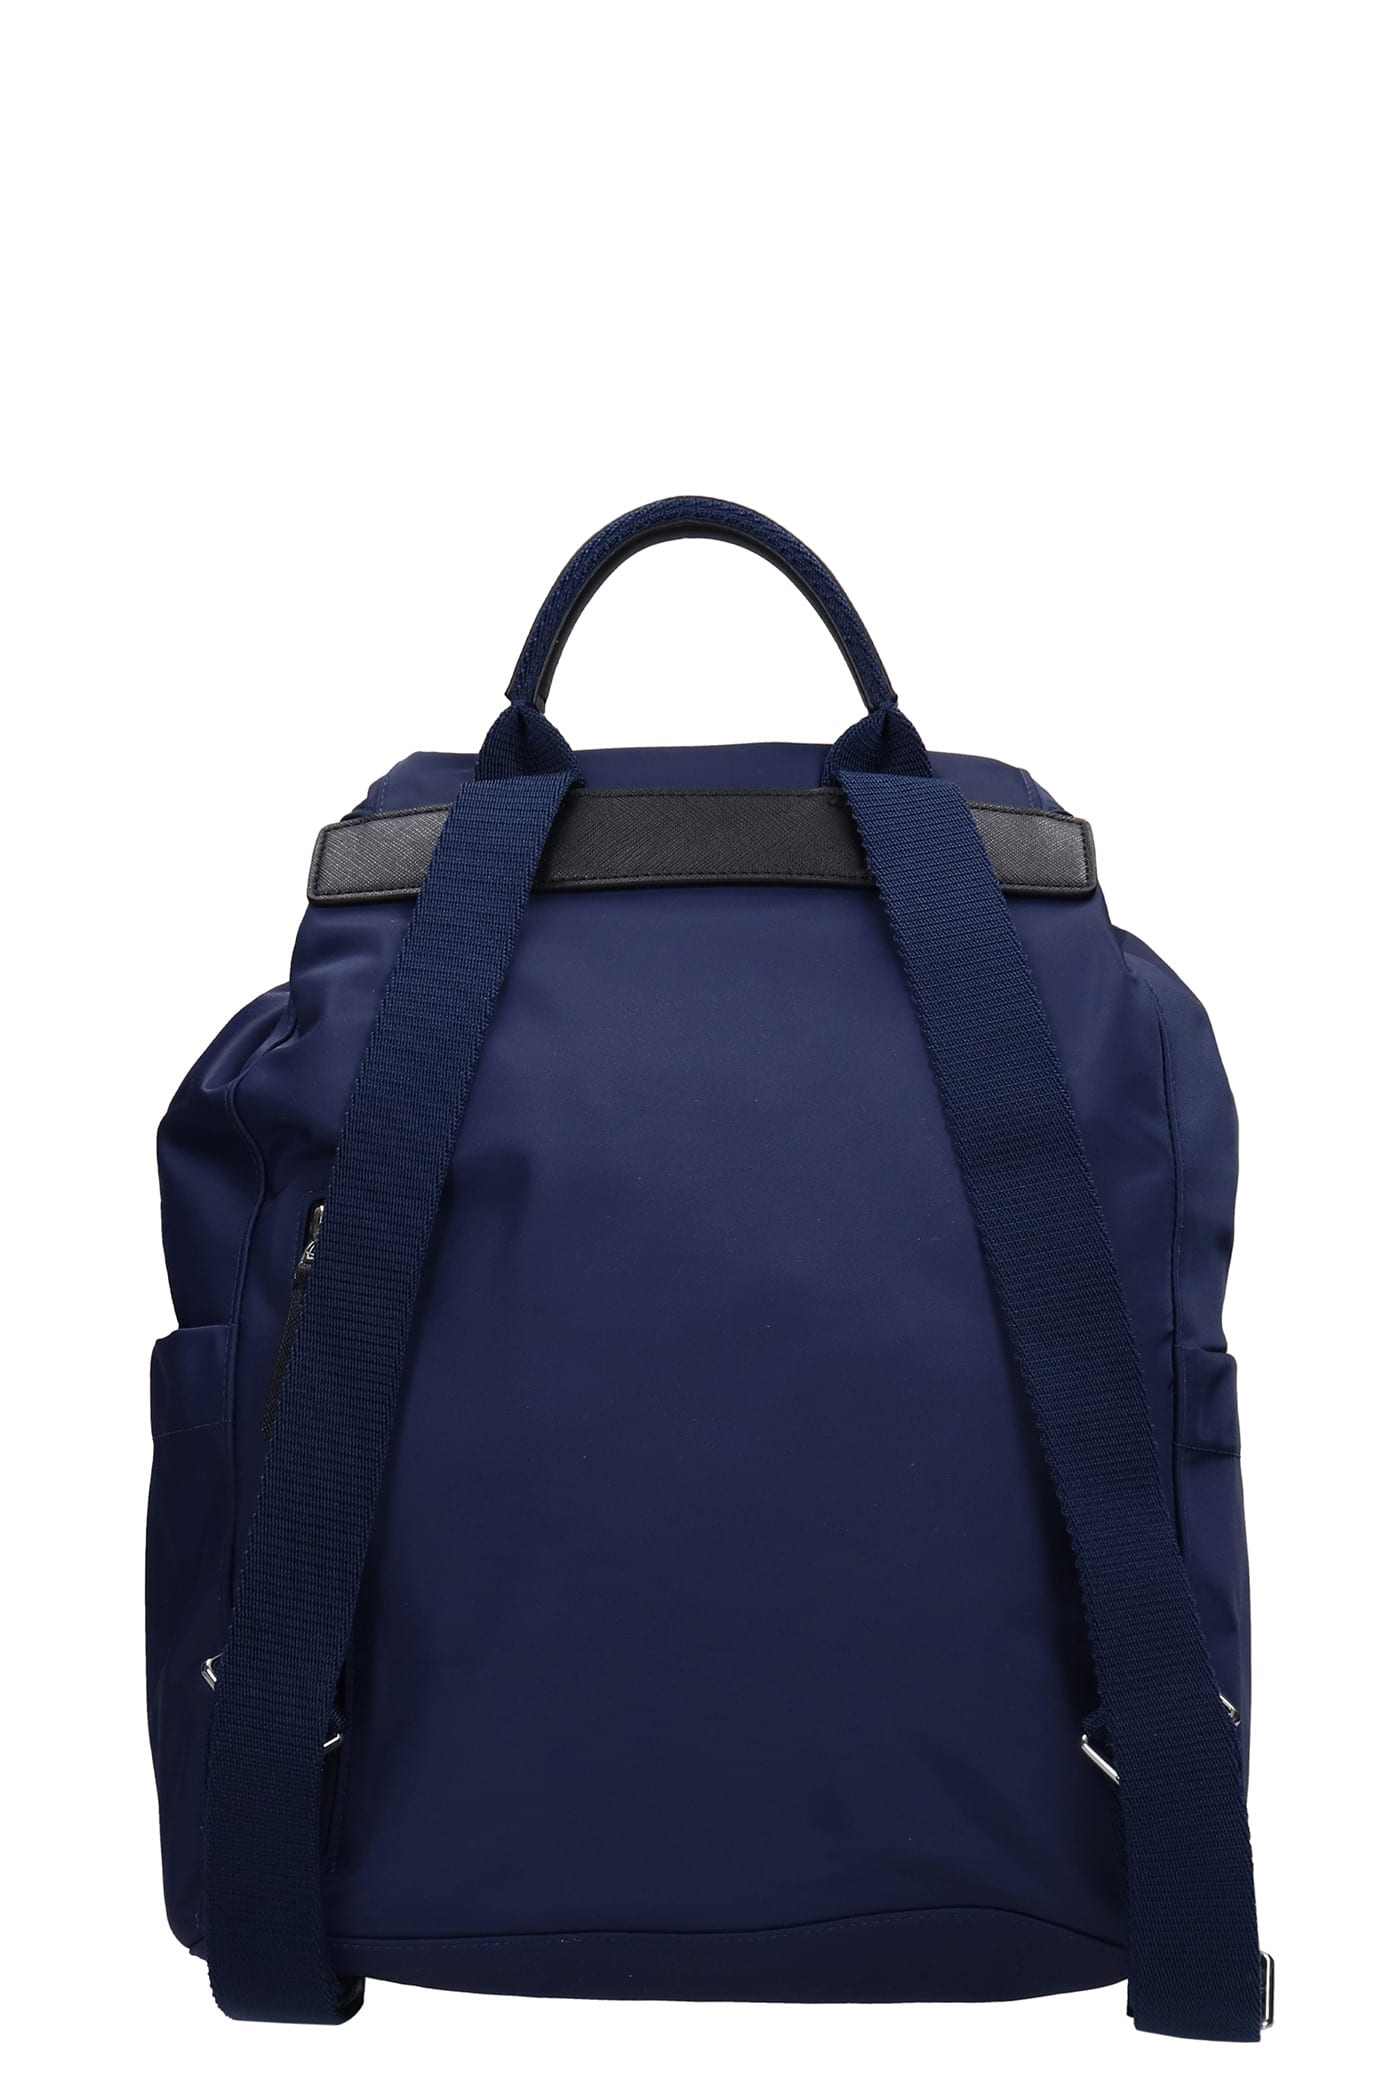 Tory Burch Backpack In Blue Nylon | italist